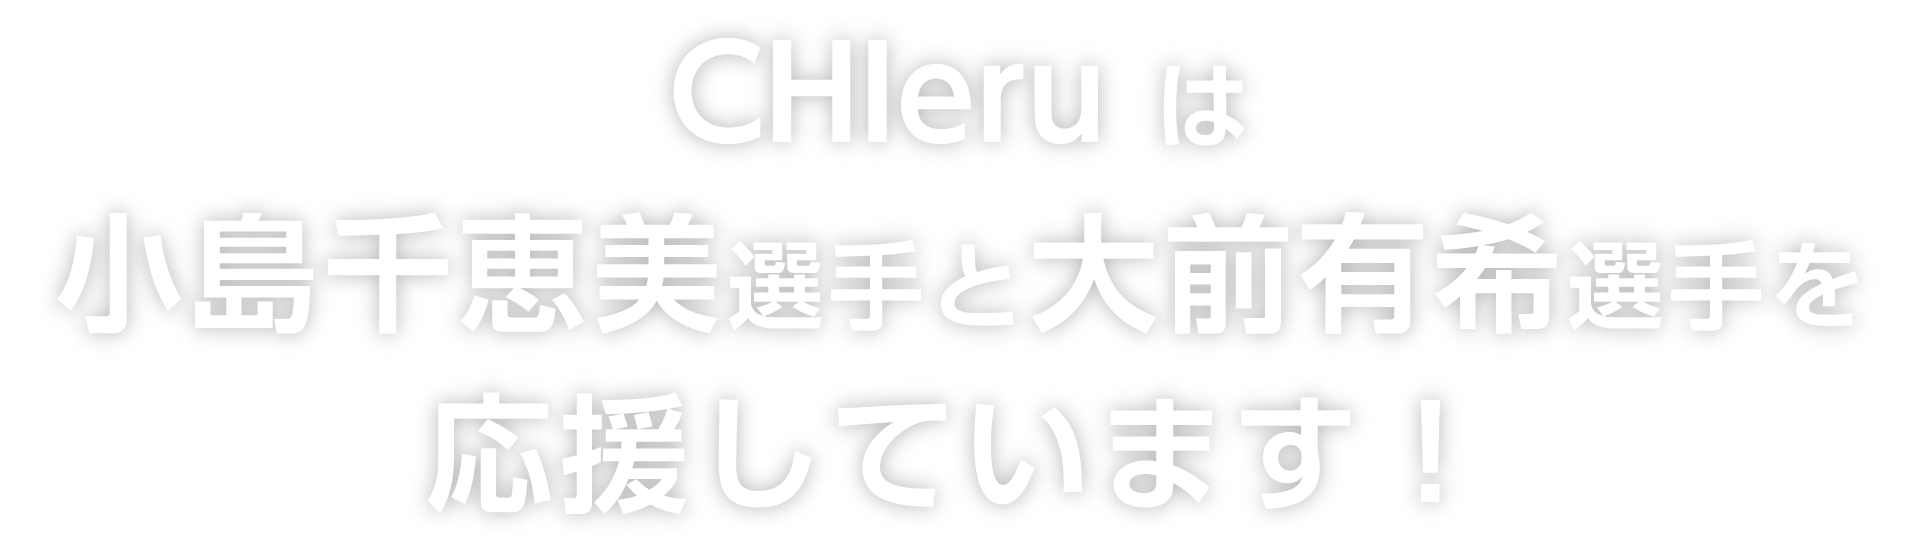 CHIeru は小島千恵美選手と大前有希選手を応援しています！